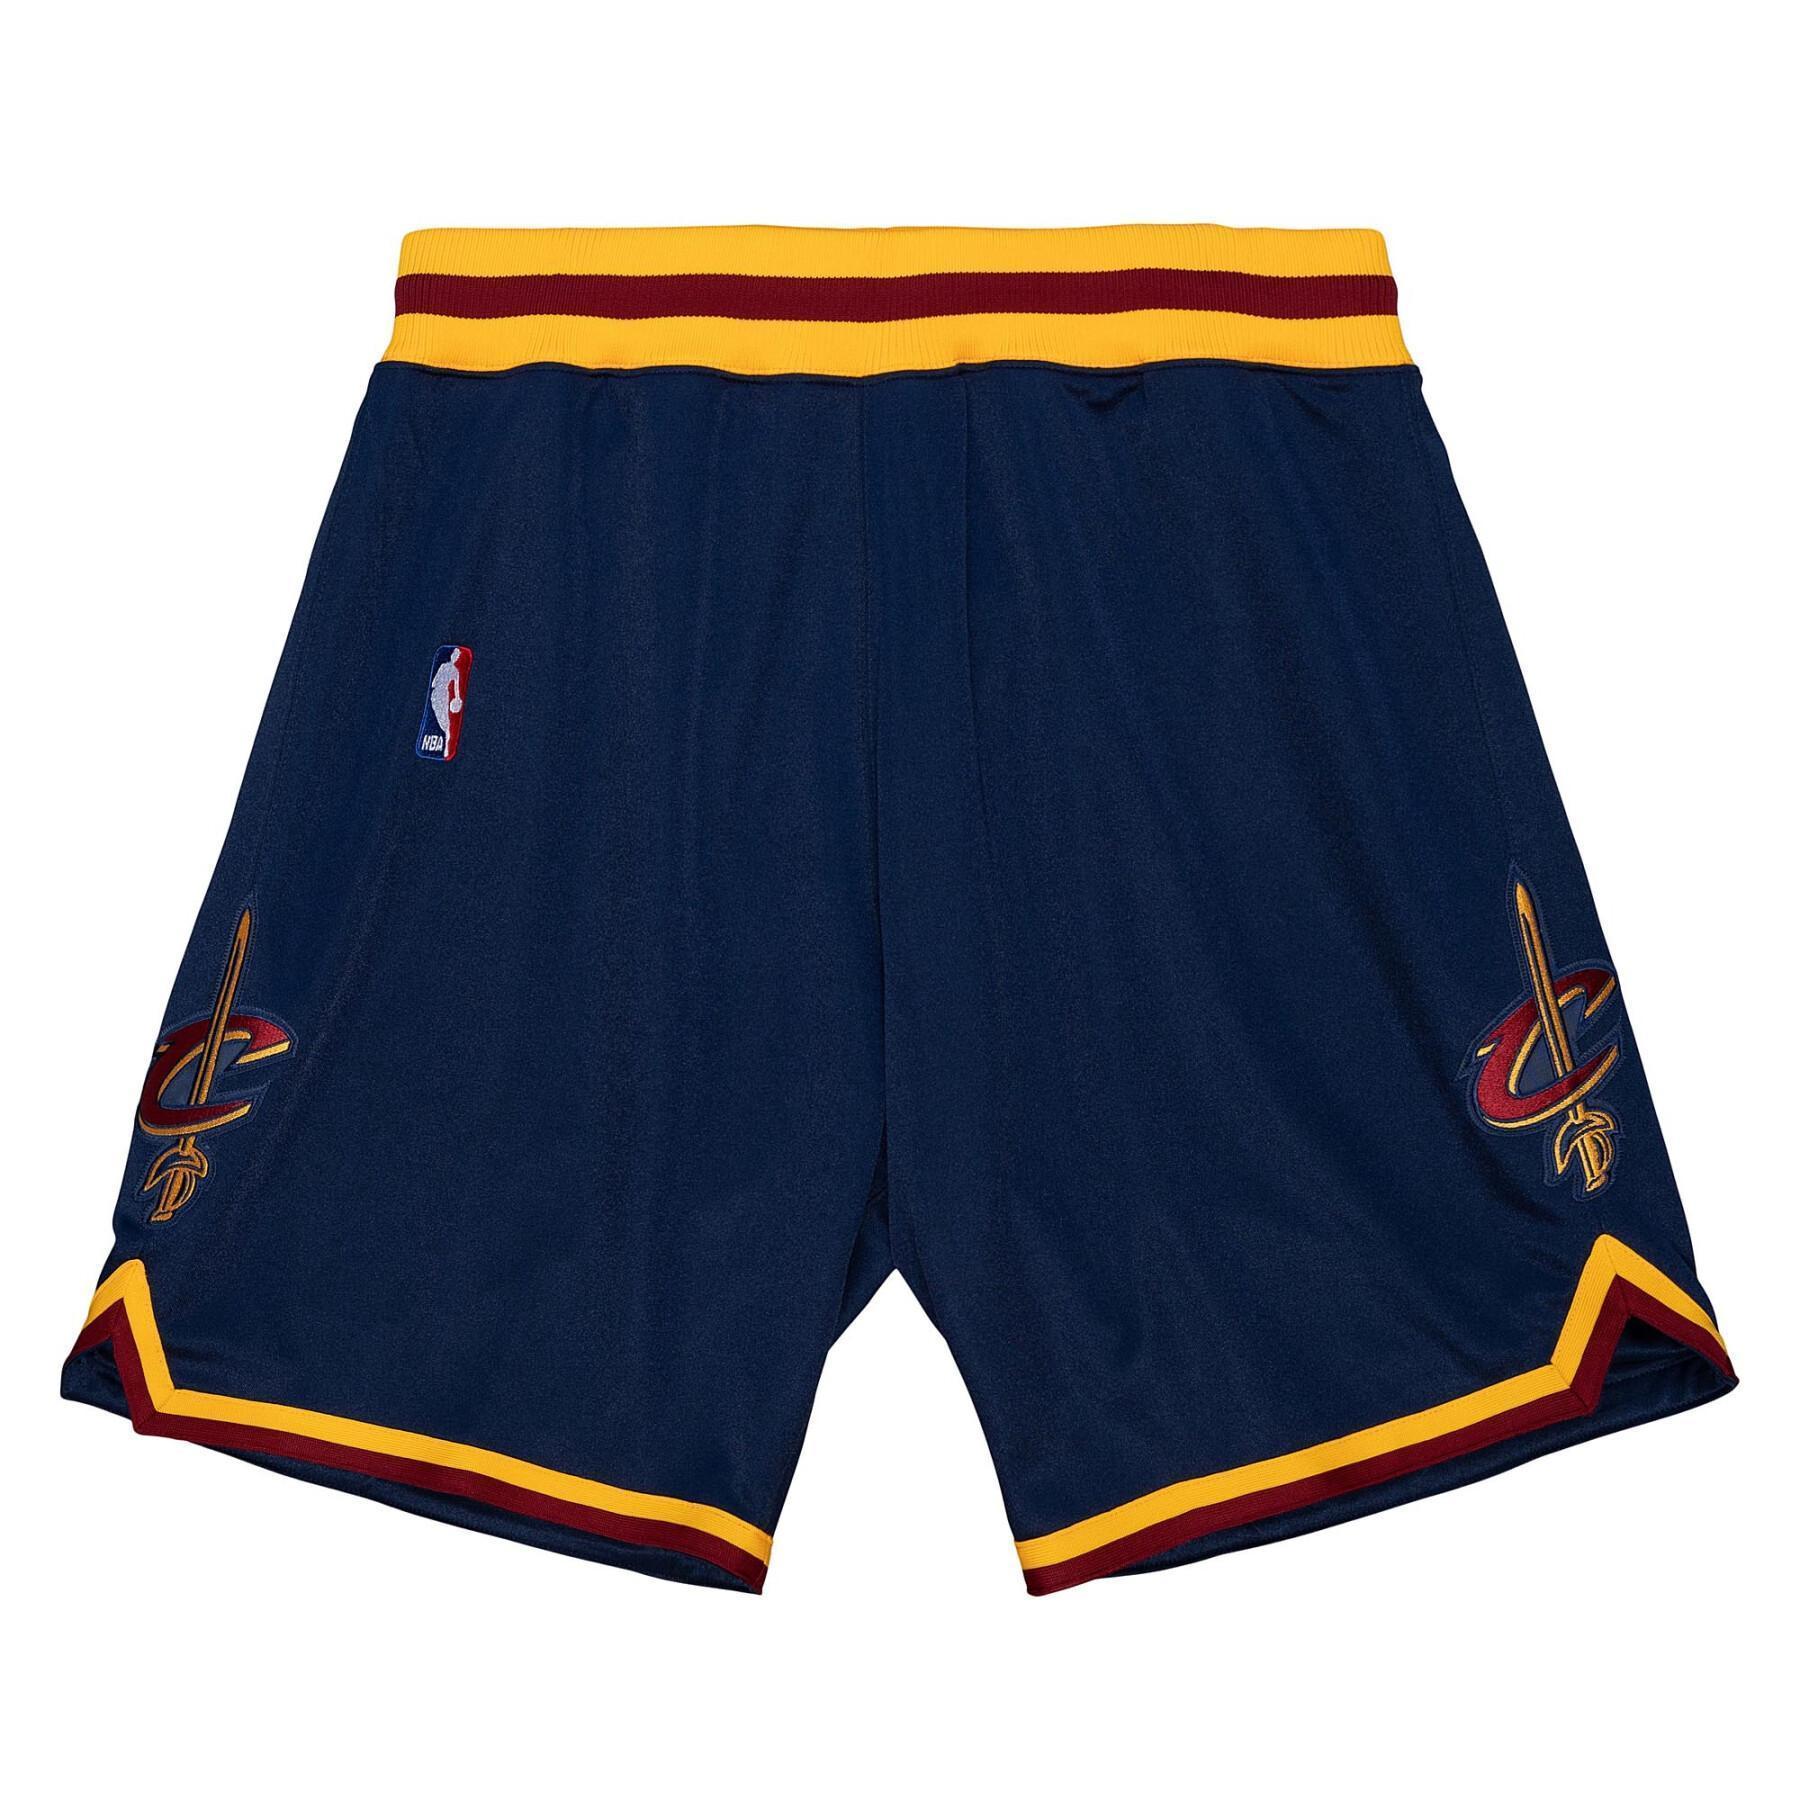 Authentieke shorts Cleveland Cavaliers Alternate 2011/12